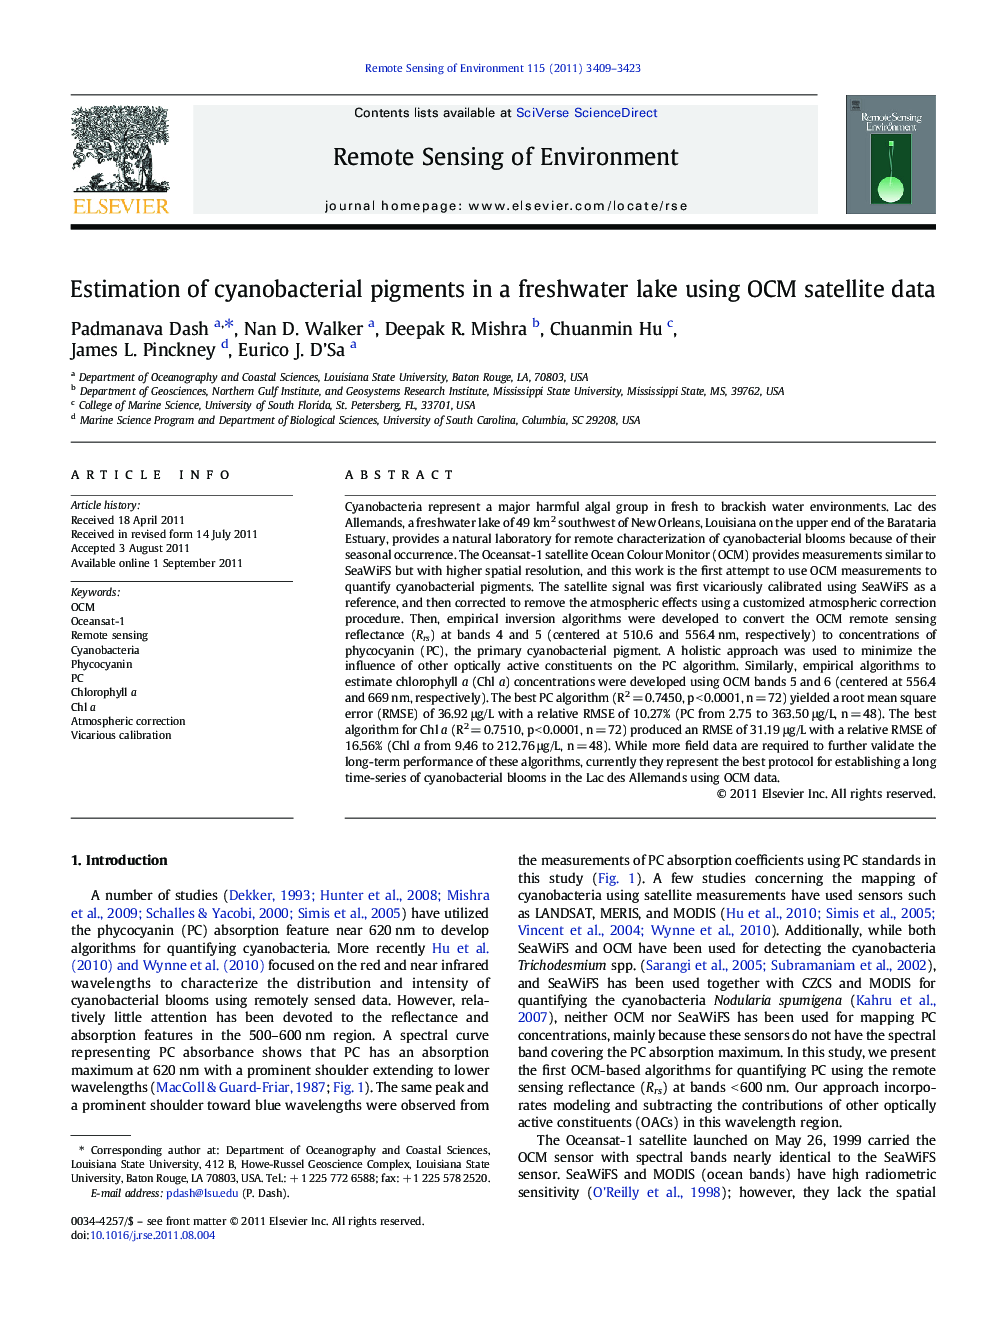 Estimation of cyanobacterial pigments in a freshwater lake using OCM satellite data